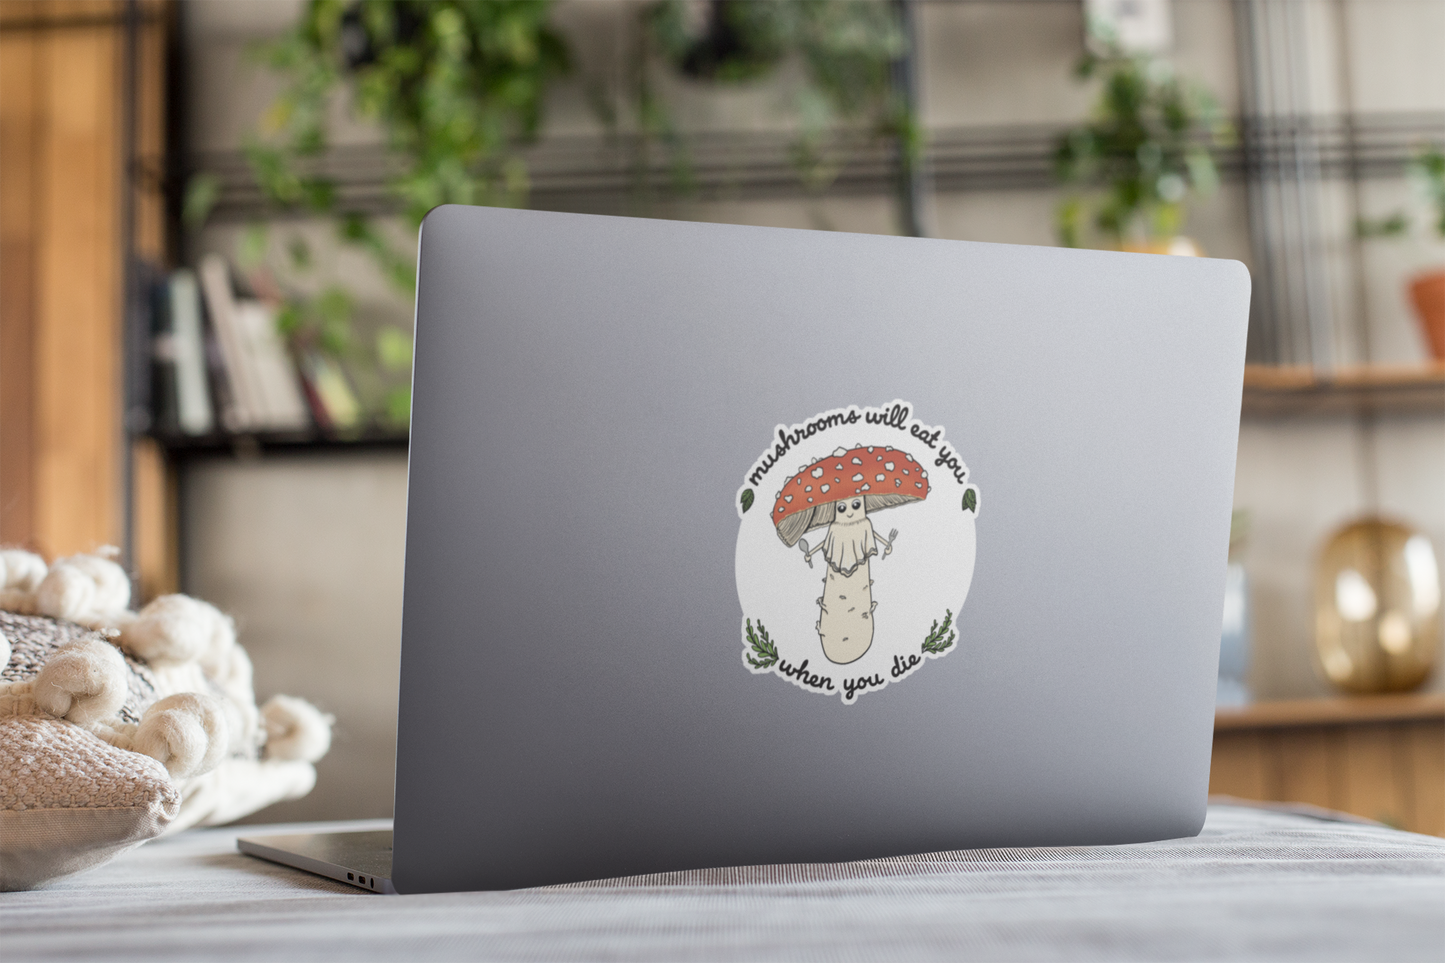 Mushrooms Will Eat You When You Die | Funny Amanita Mushroom Sticker